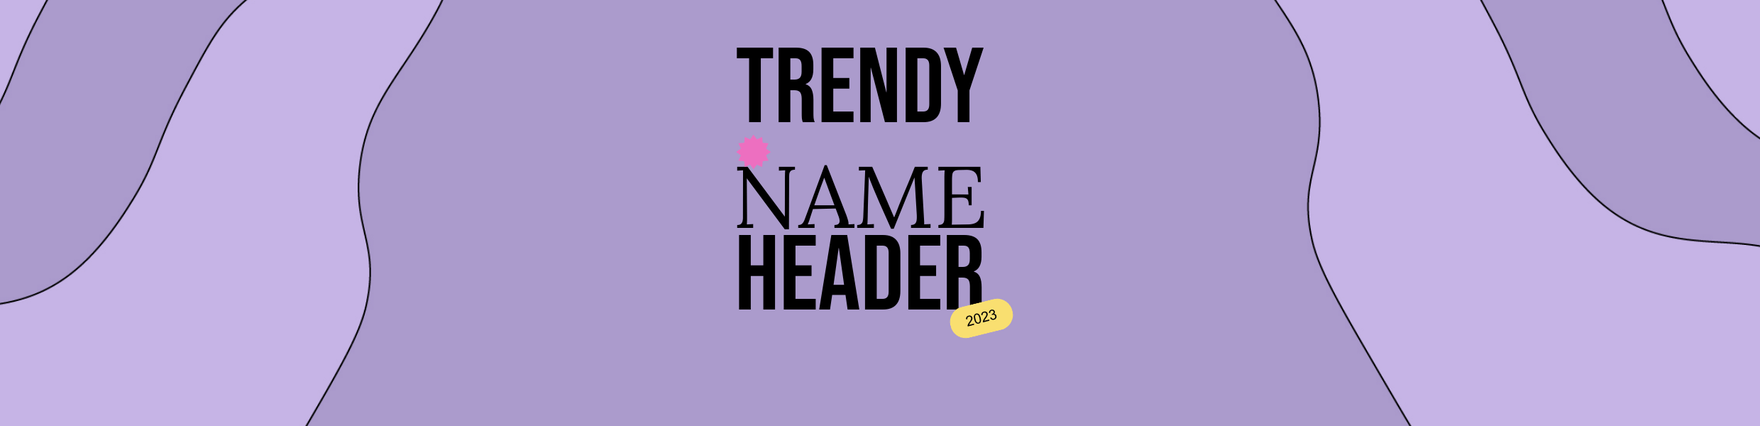 Trendy Name Header